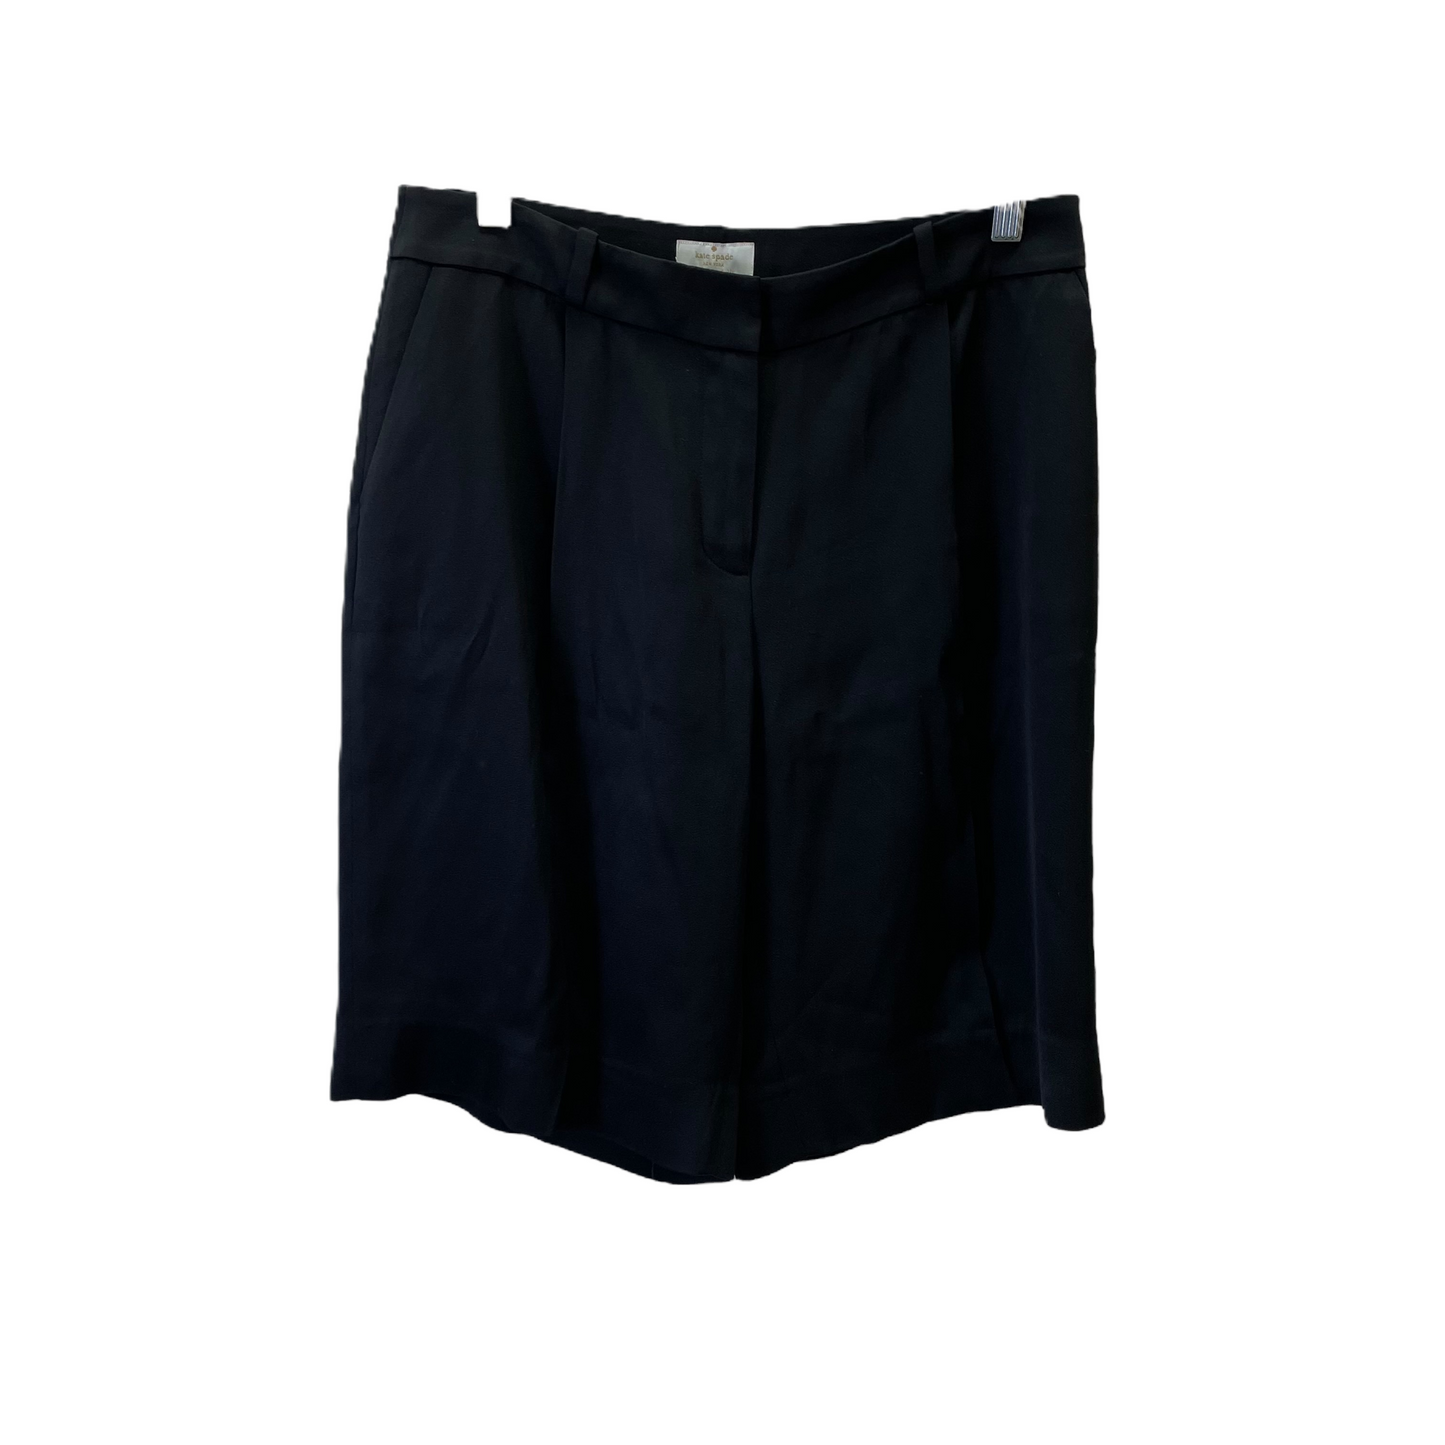 Black Shorts By Kate Spade, Size: 4